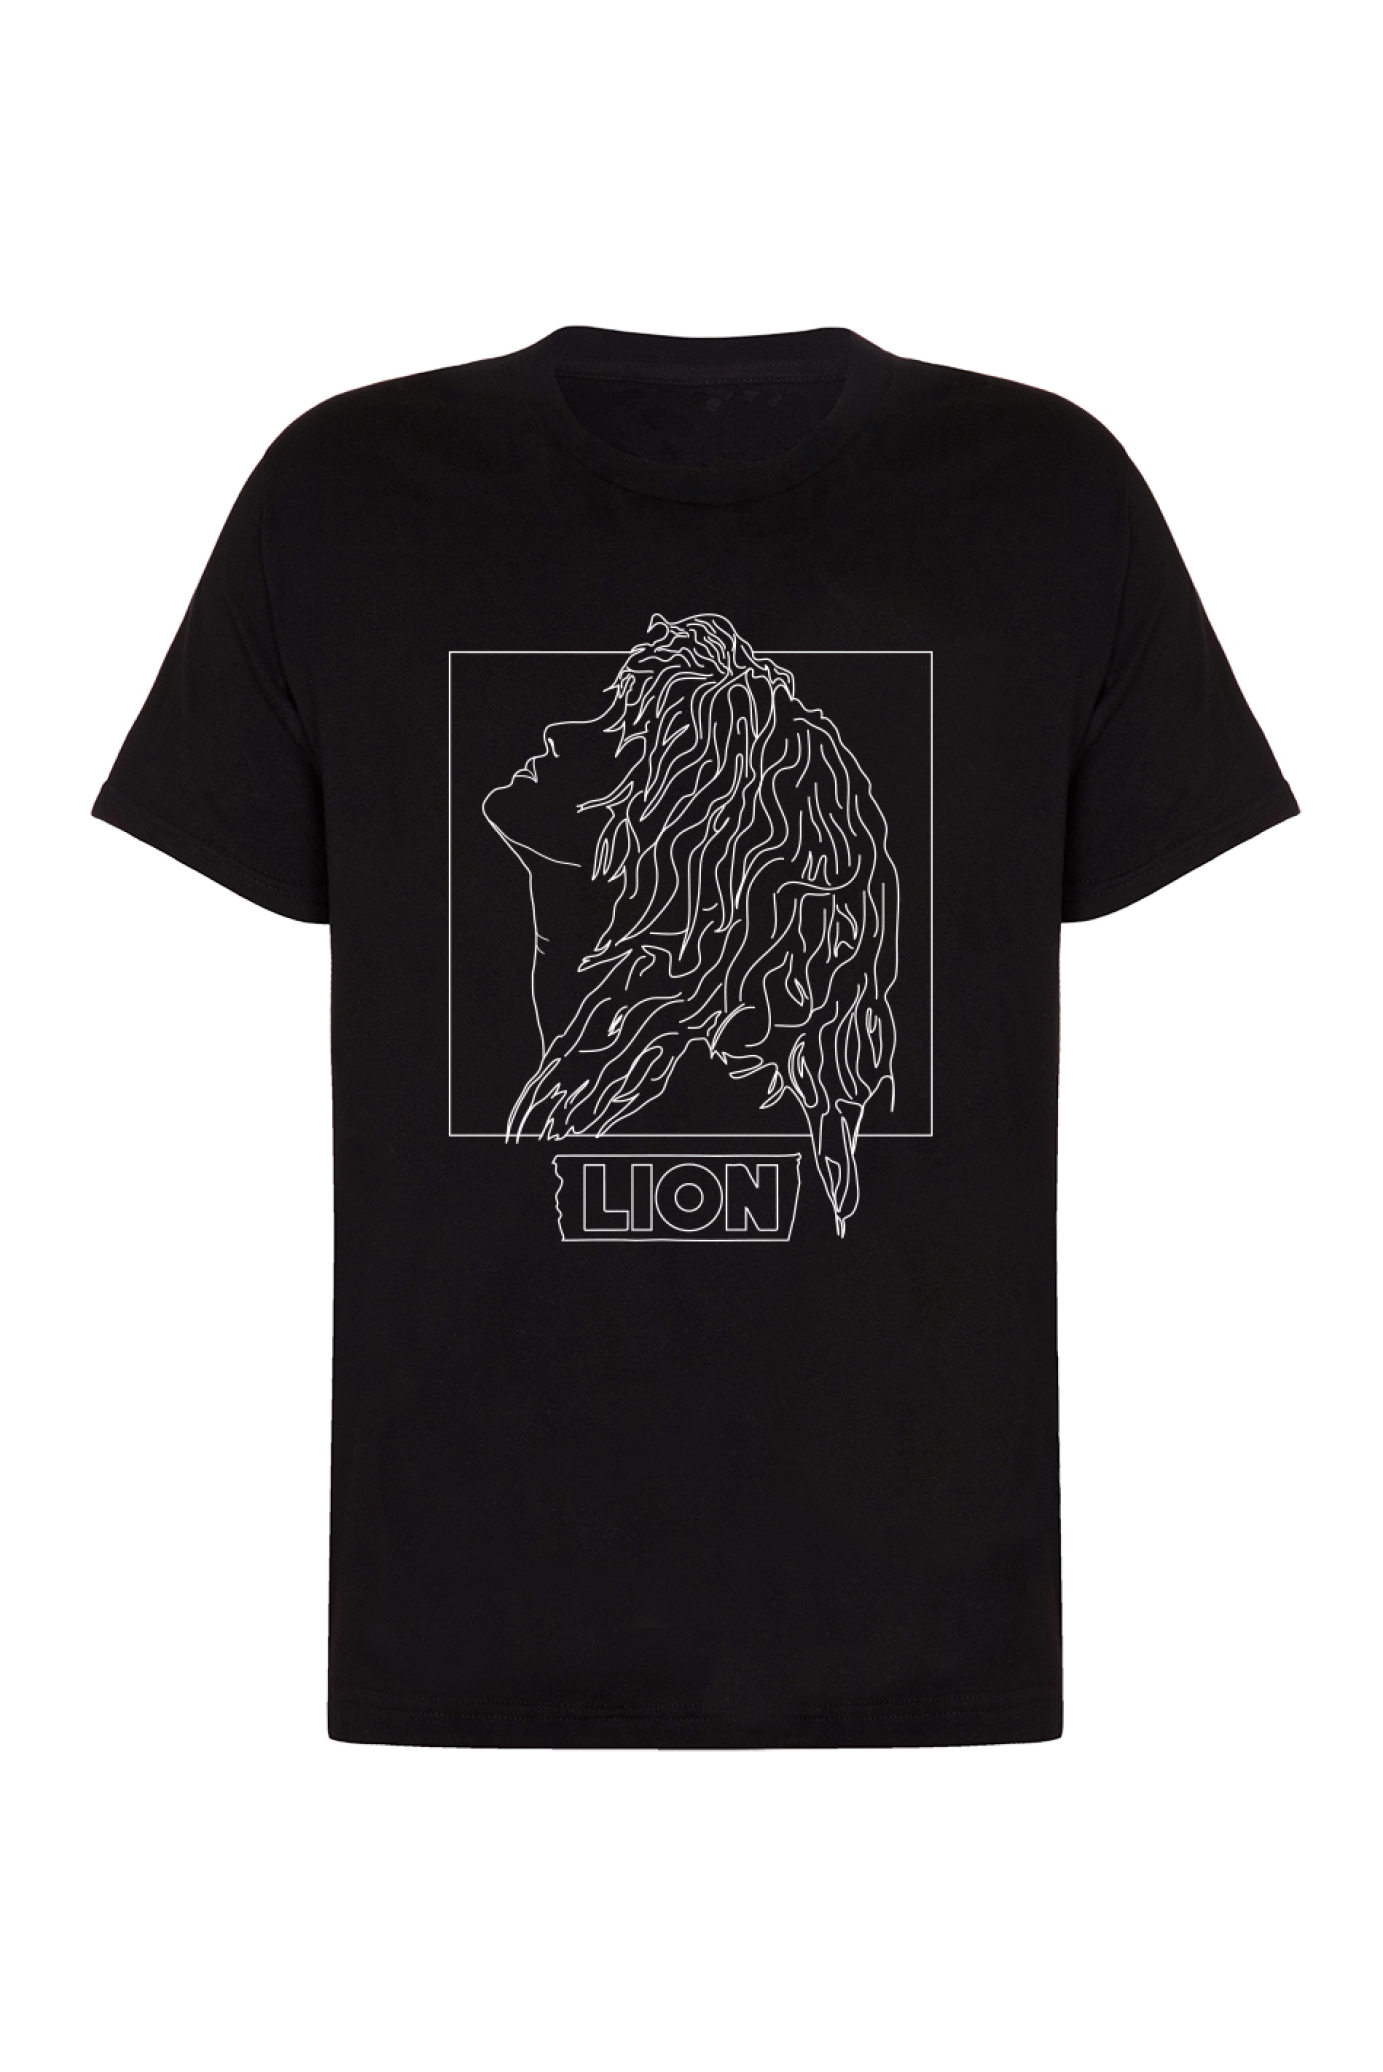 LION Merchandise.